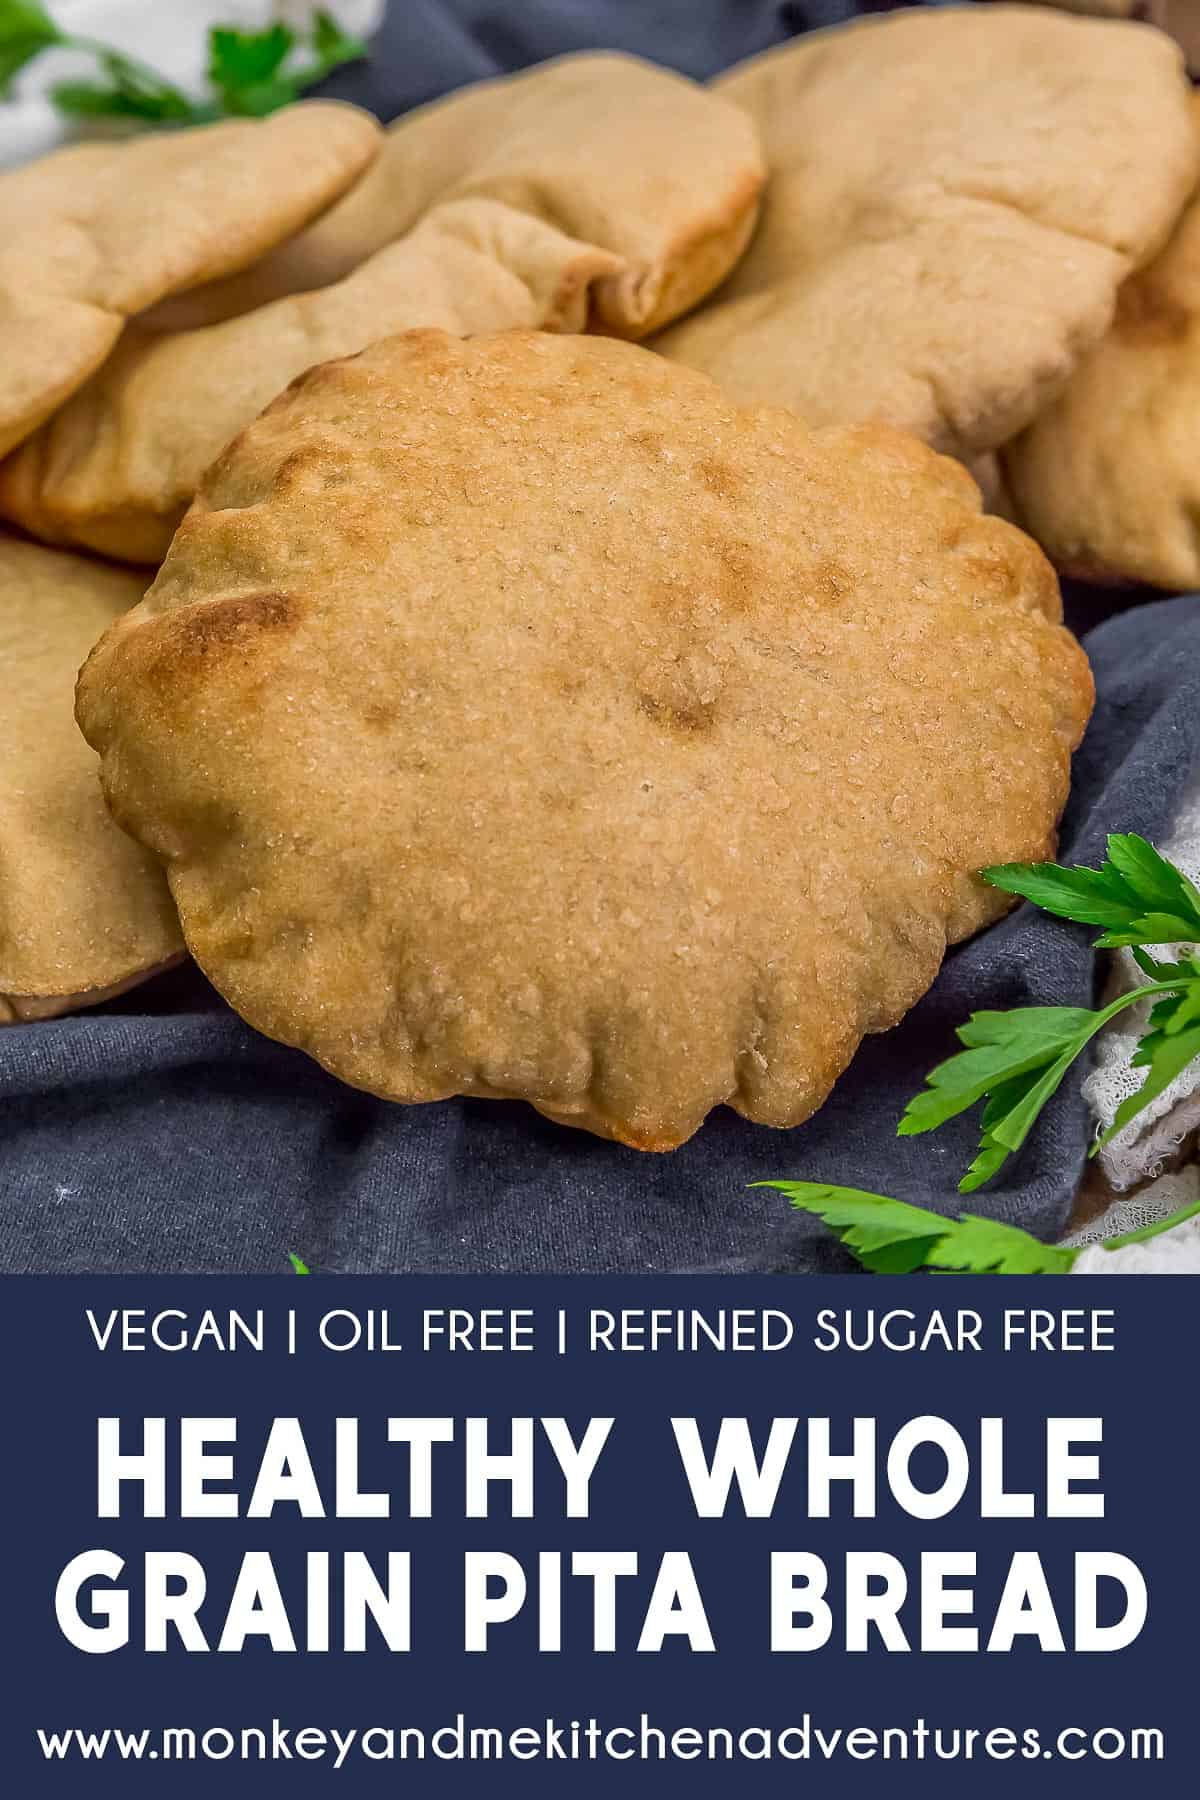 Healthy Whole Grain Pita Bread with Text Description